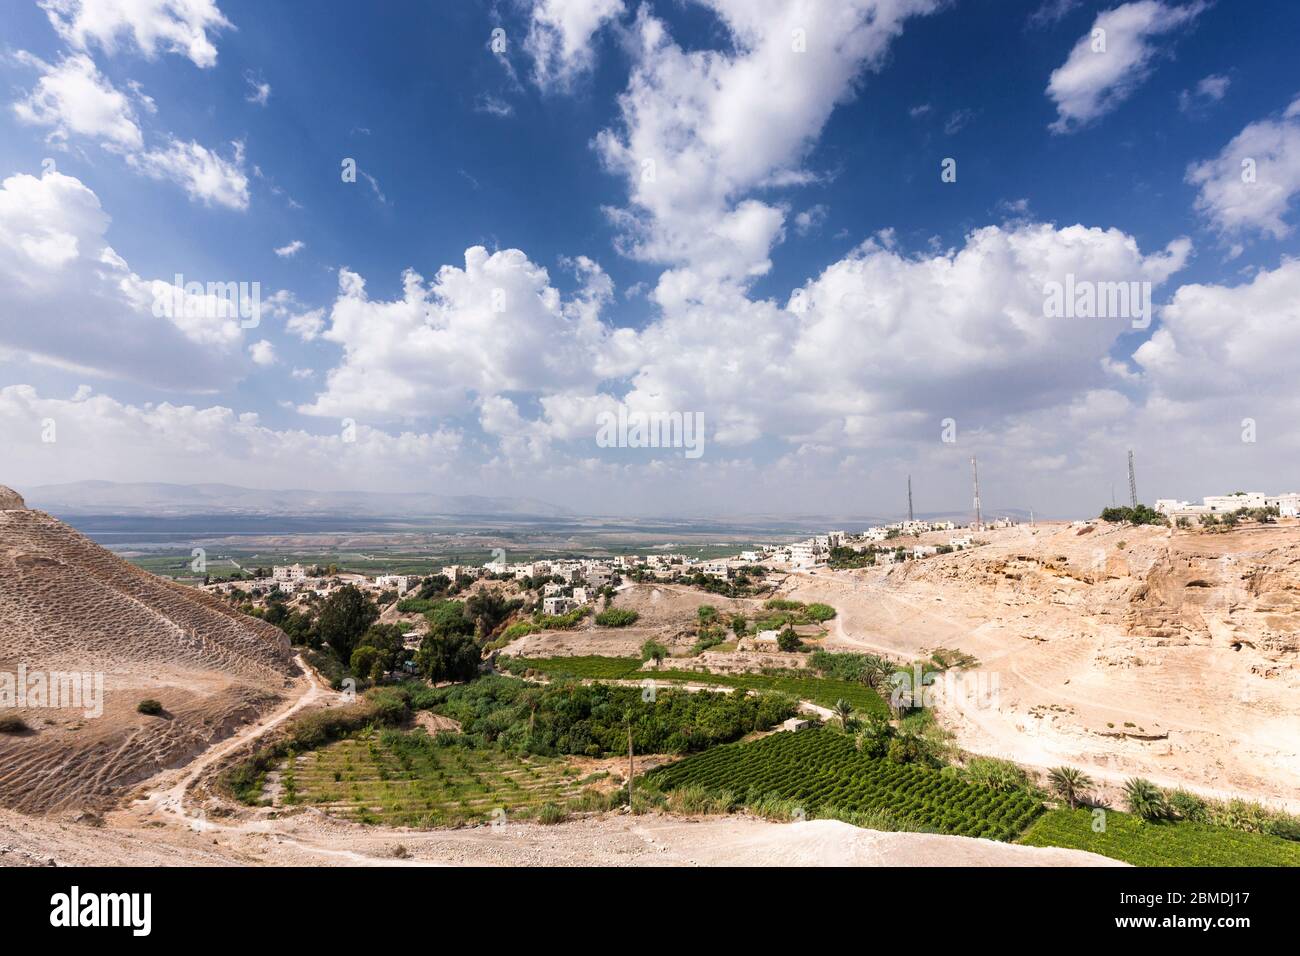 Agricultural farm near Pella Ruins, Jordan valley,Tabqet Fahel, Tabaqat Fahl, Irbit, Irbid governorate, Jordan, middle east, Asia Stock Photo